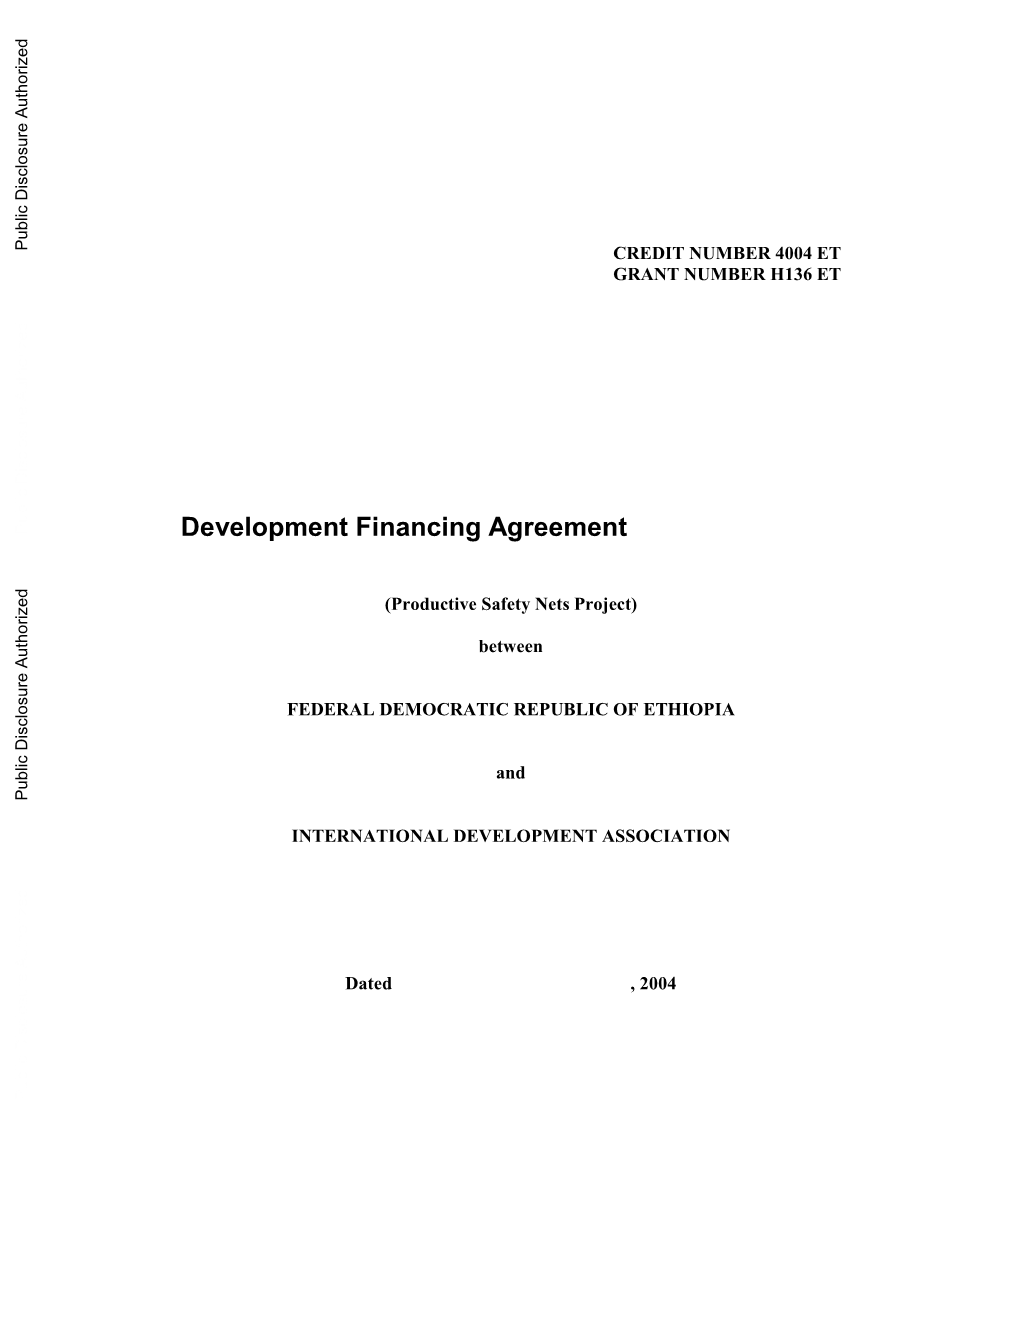 Development Financing Agreement